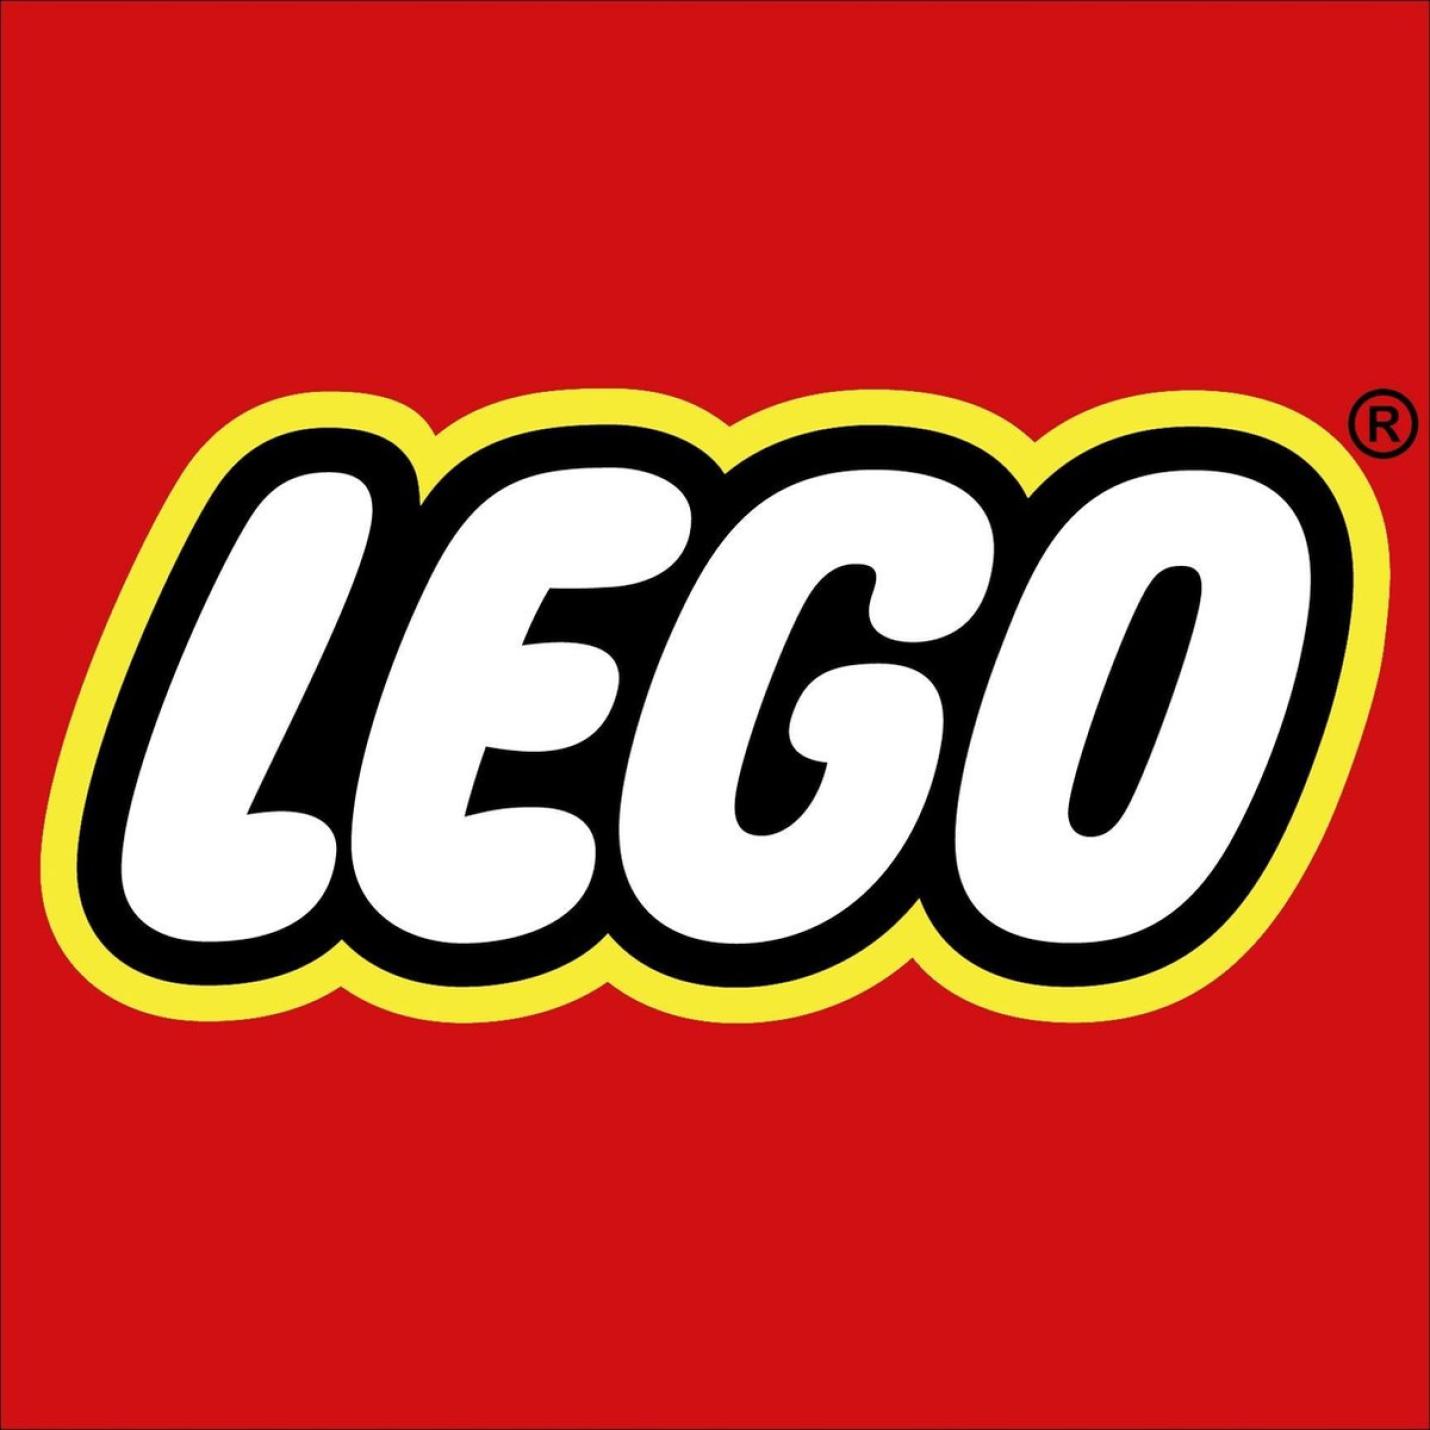 LEGO Architecture Londen - 21034 16